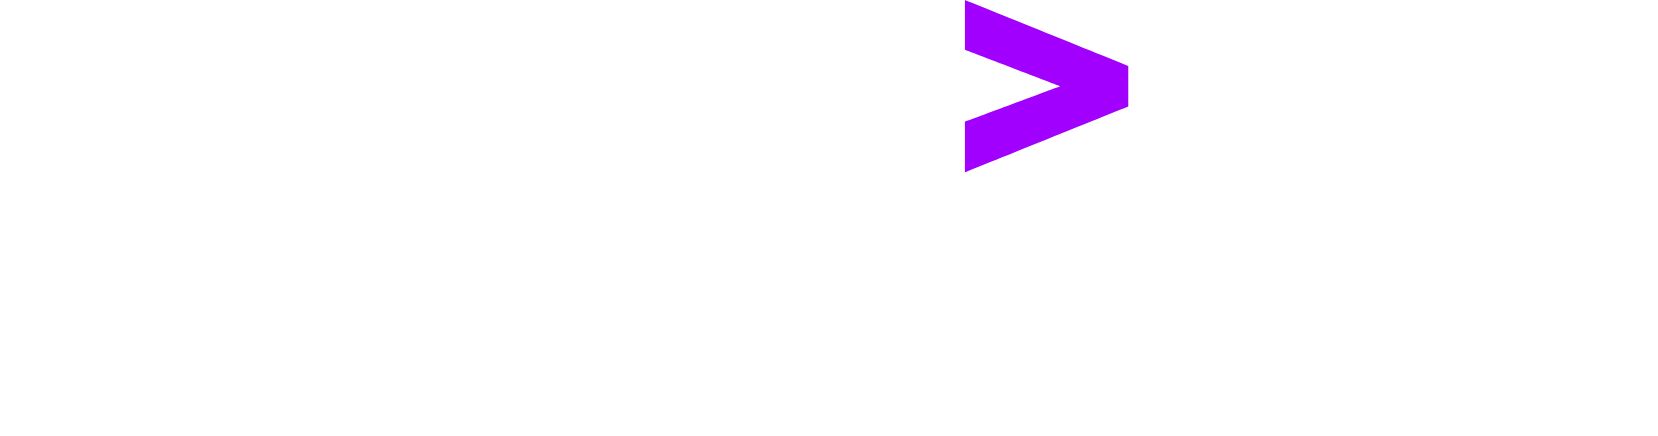 Accenture logo large for dark backgrounds (transparent PNG)